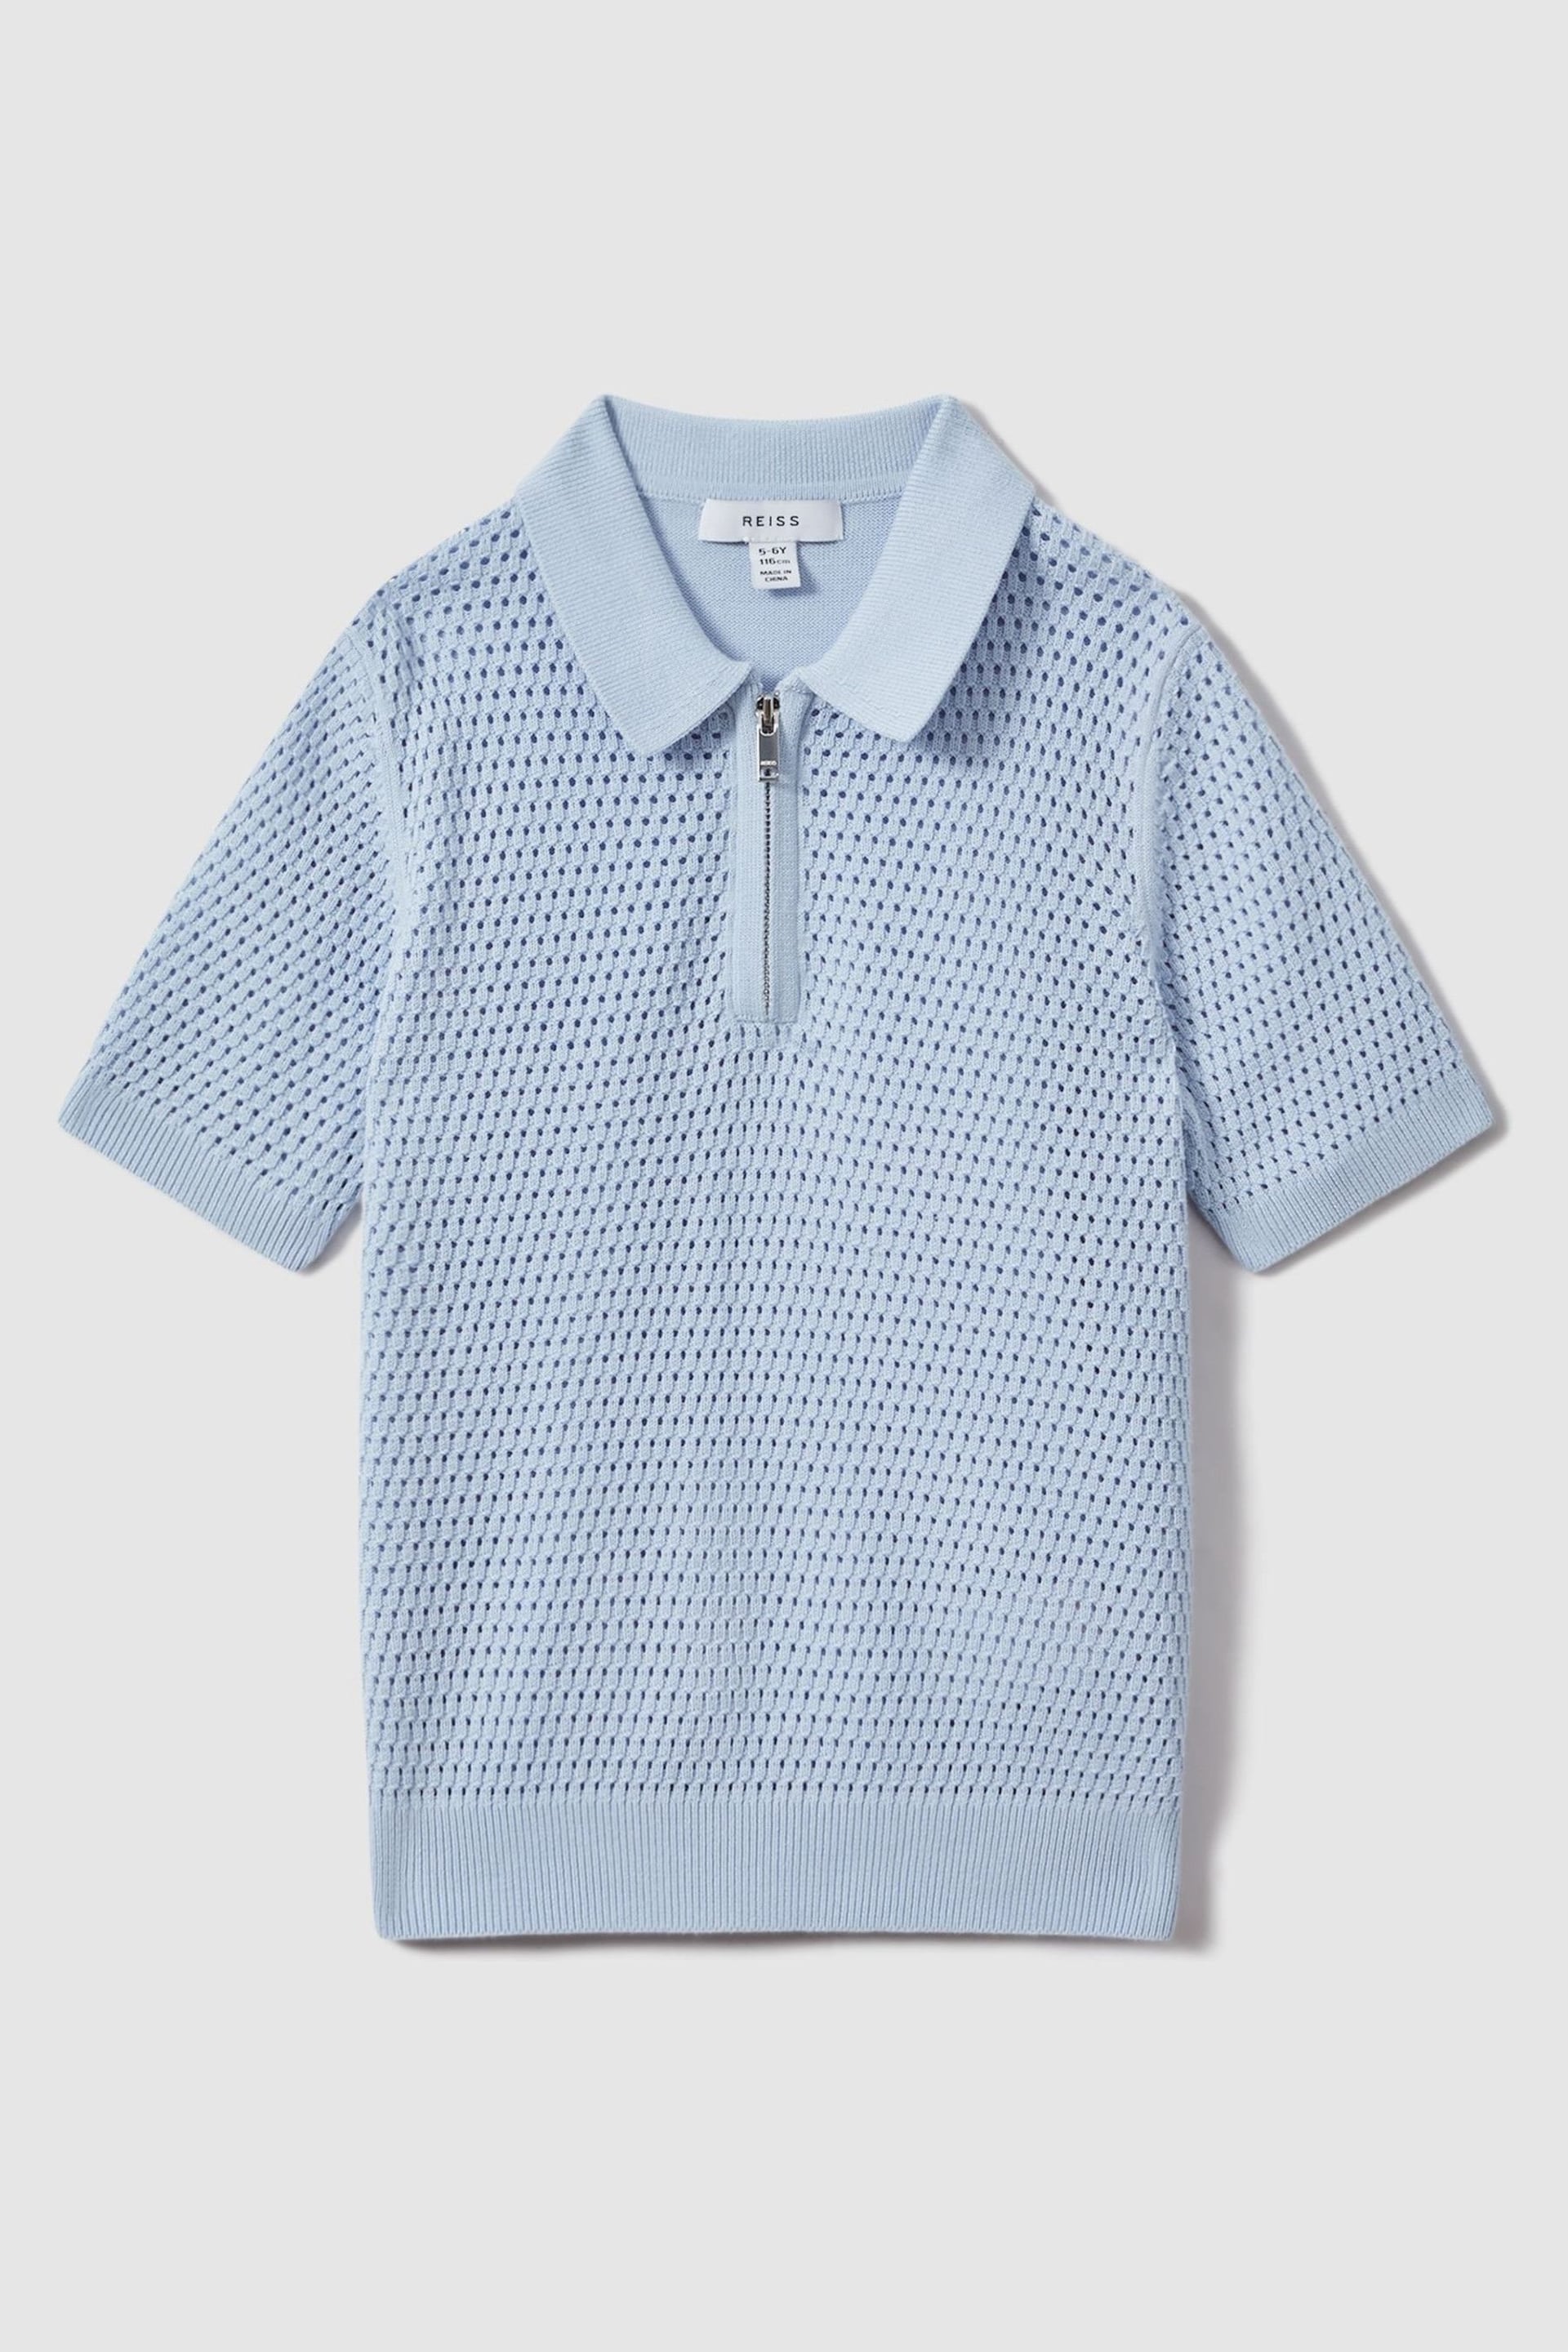 Reiss Soft Blue Burnham Senior Textured Half-Zip Polo T-Shirt - Image 2 of 4